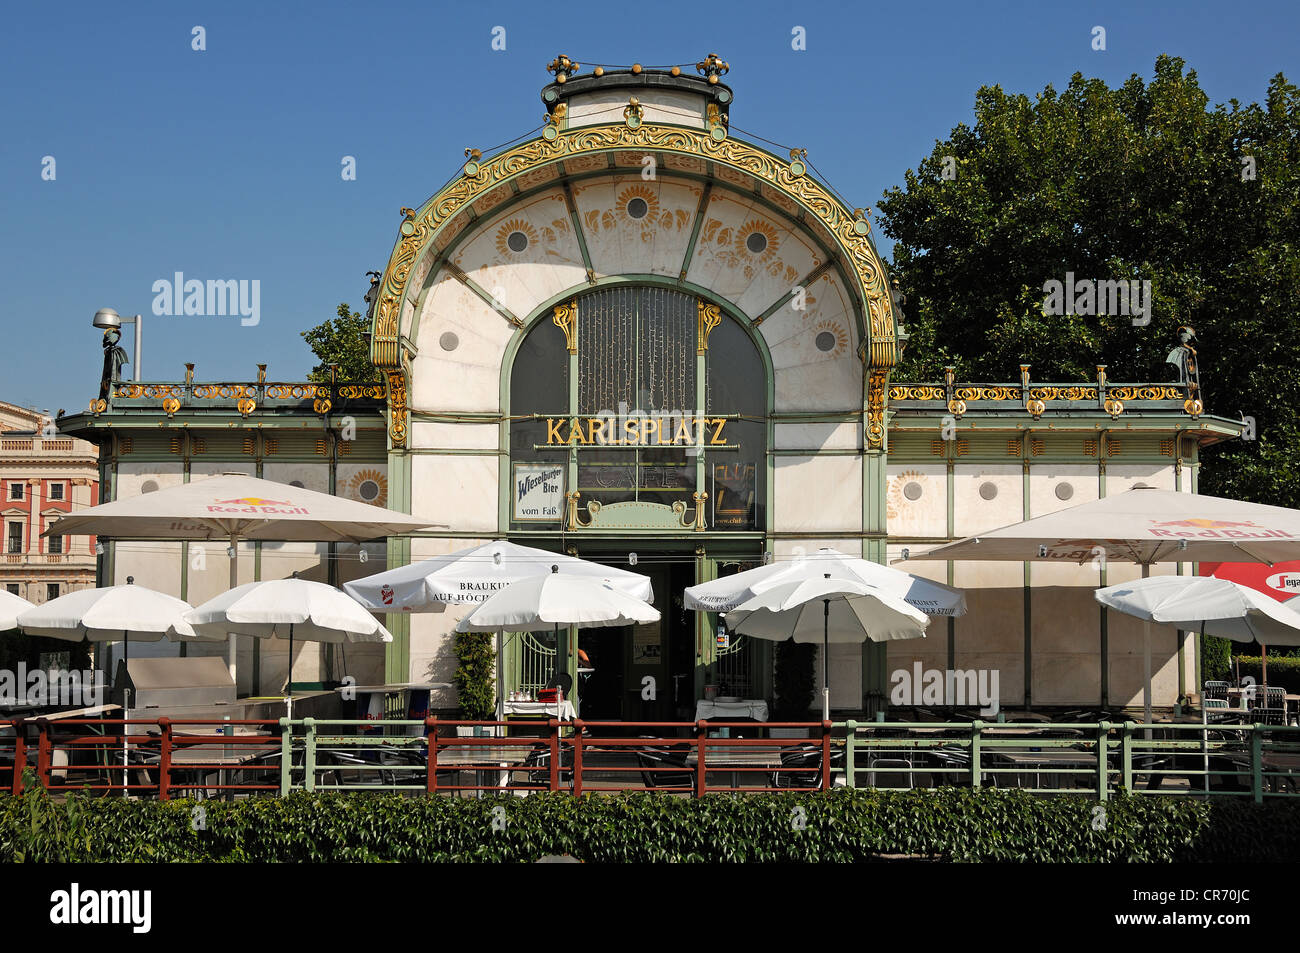 Café on Karlsplatz square, Otto Wagner Pavilion, Art Nouveau style, built 1897, Karlsplatz square, Vienna, Austria, Europe Stock Photo